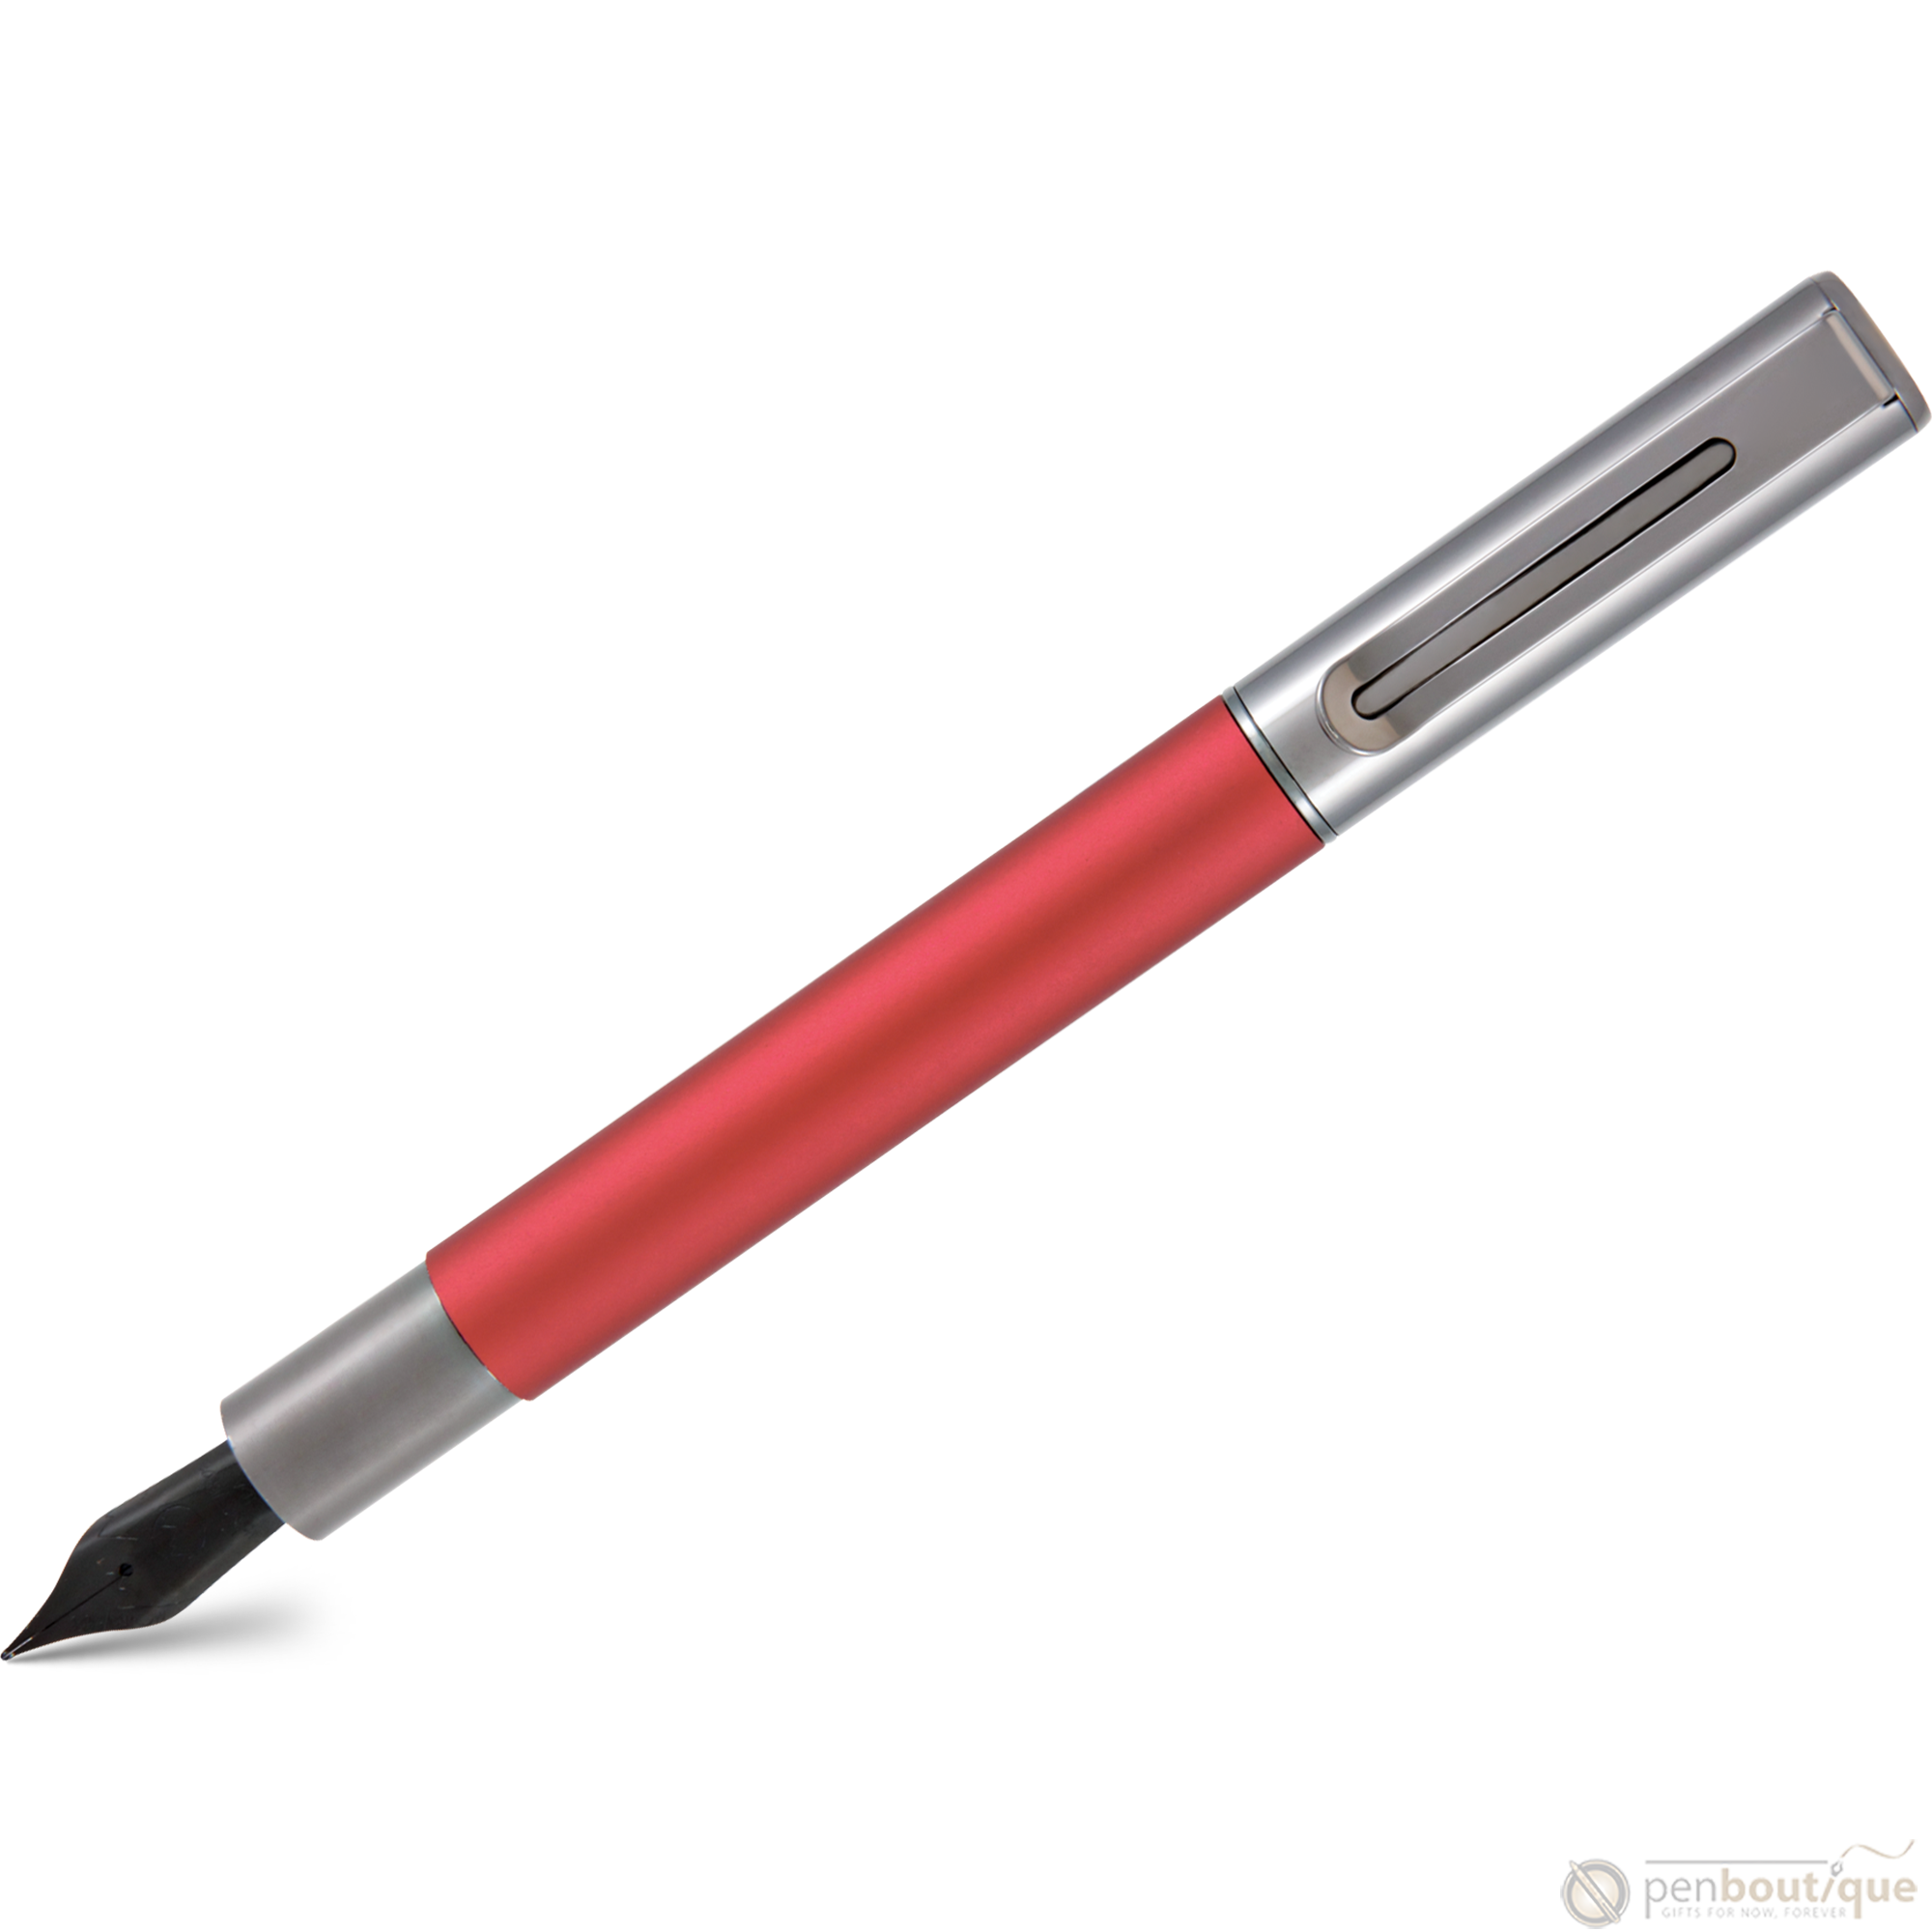 Monteverde Ritma Fountain Pen - Red-Pen Boutique Ltd